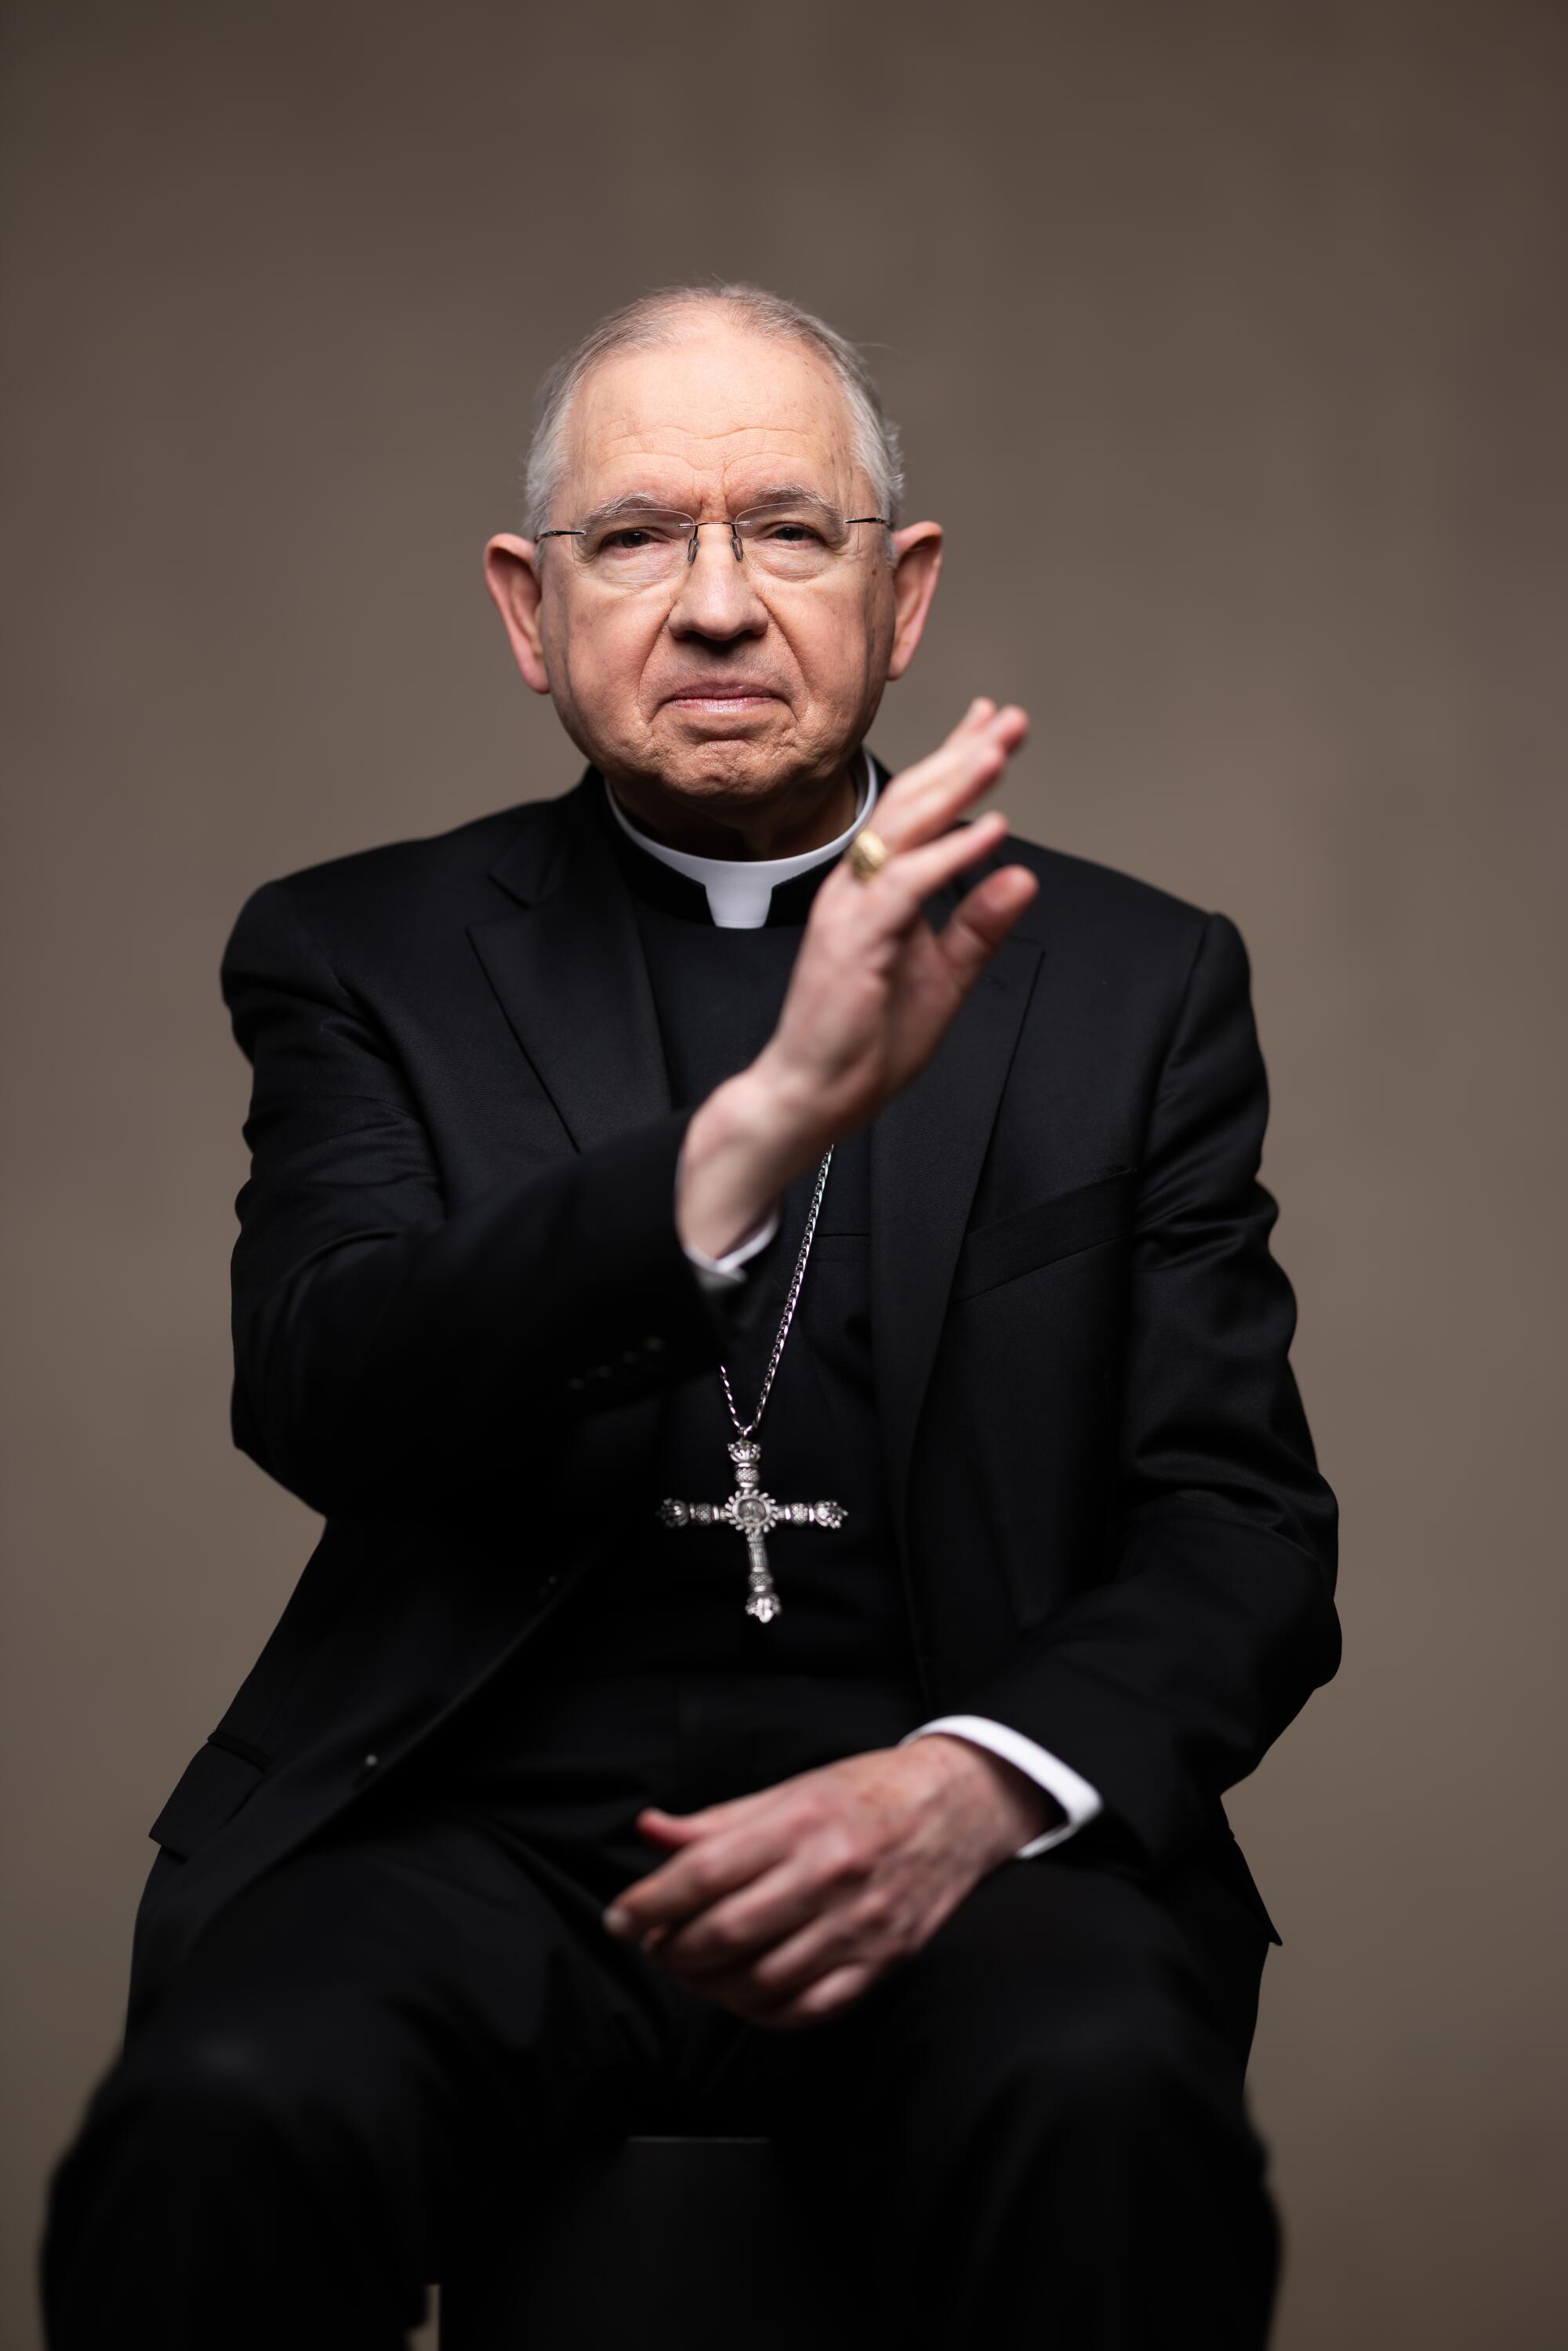 Archbishop Gomez